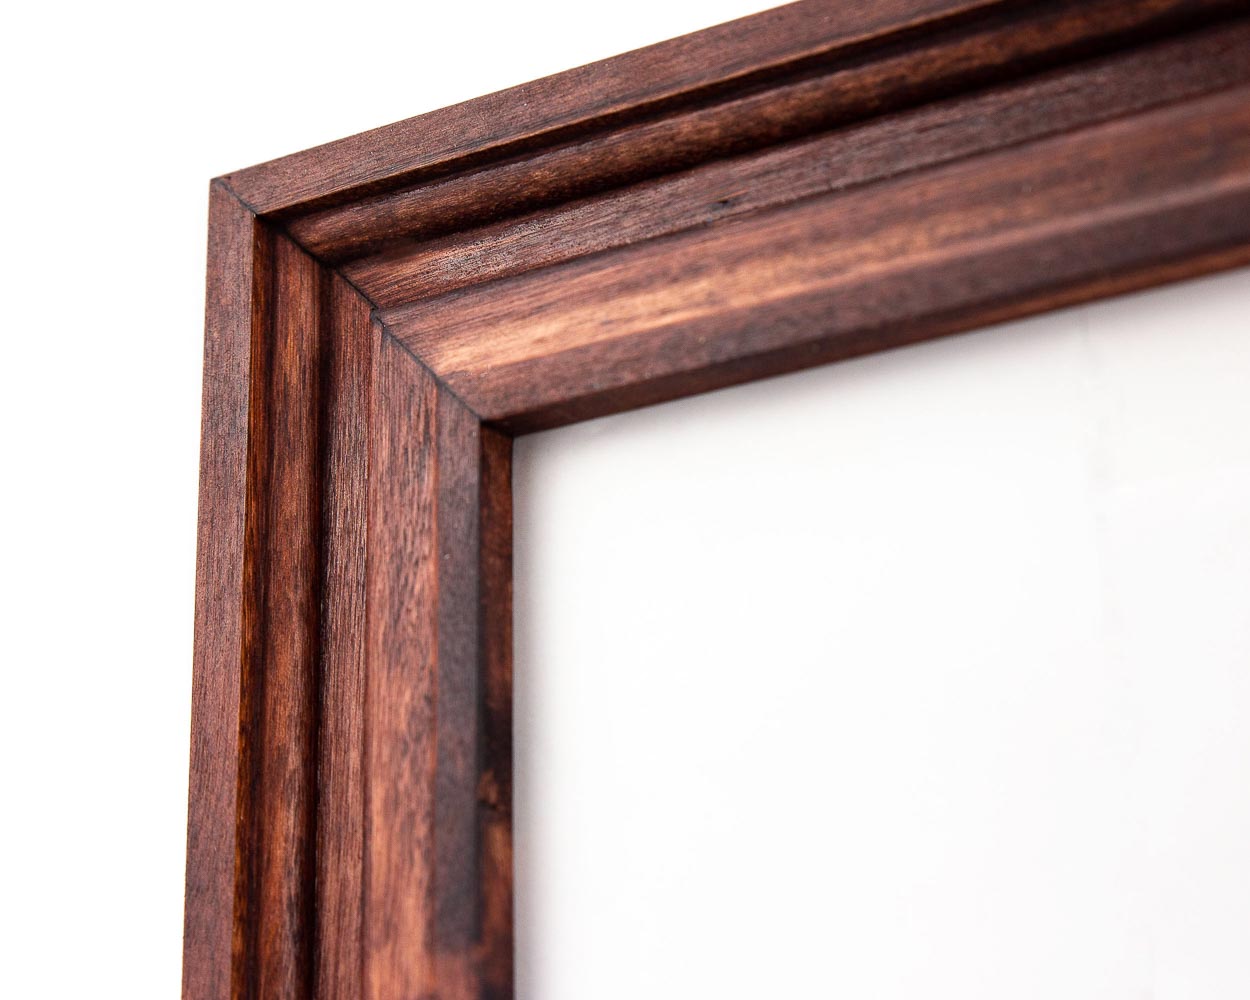 Reddish Brown Vintage Design Photo Frame from Solid Birch Hardwood 2 inch wide